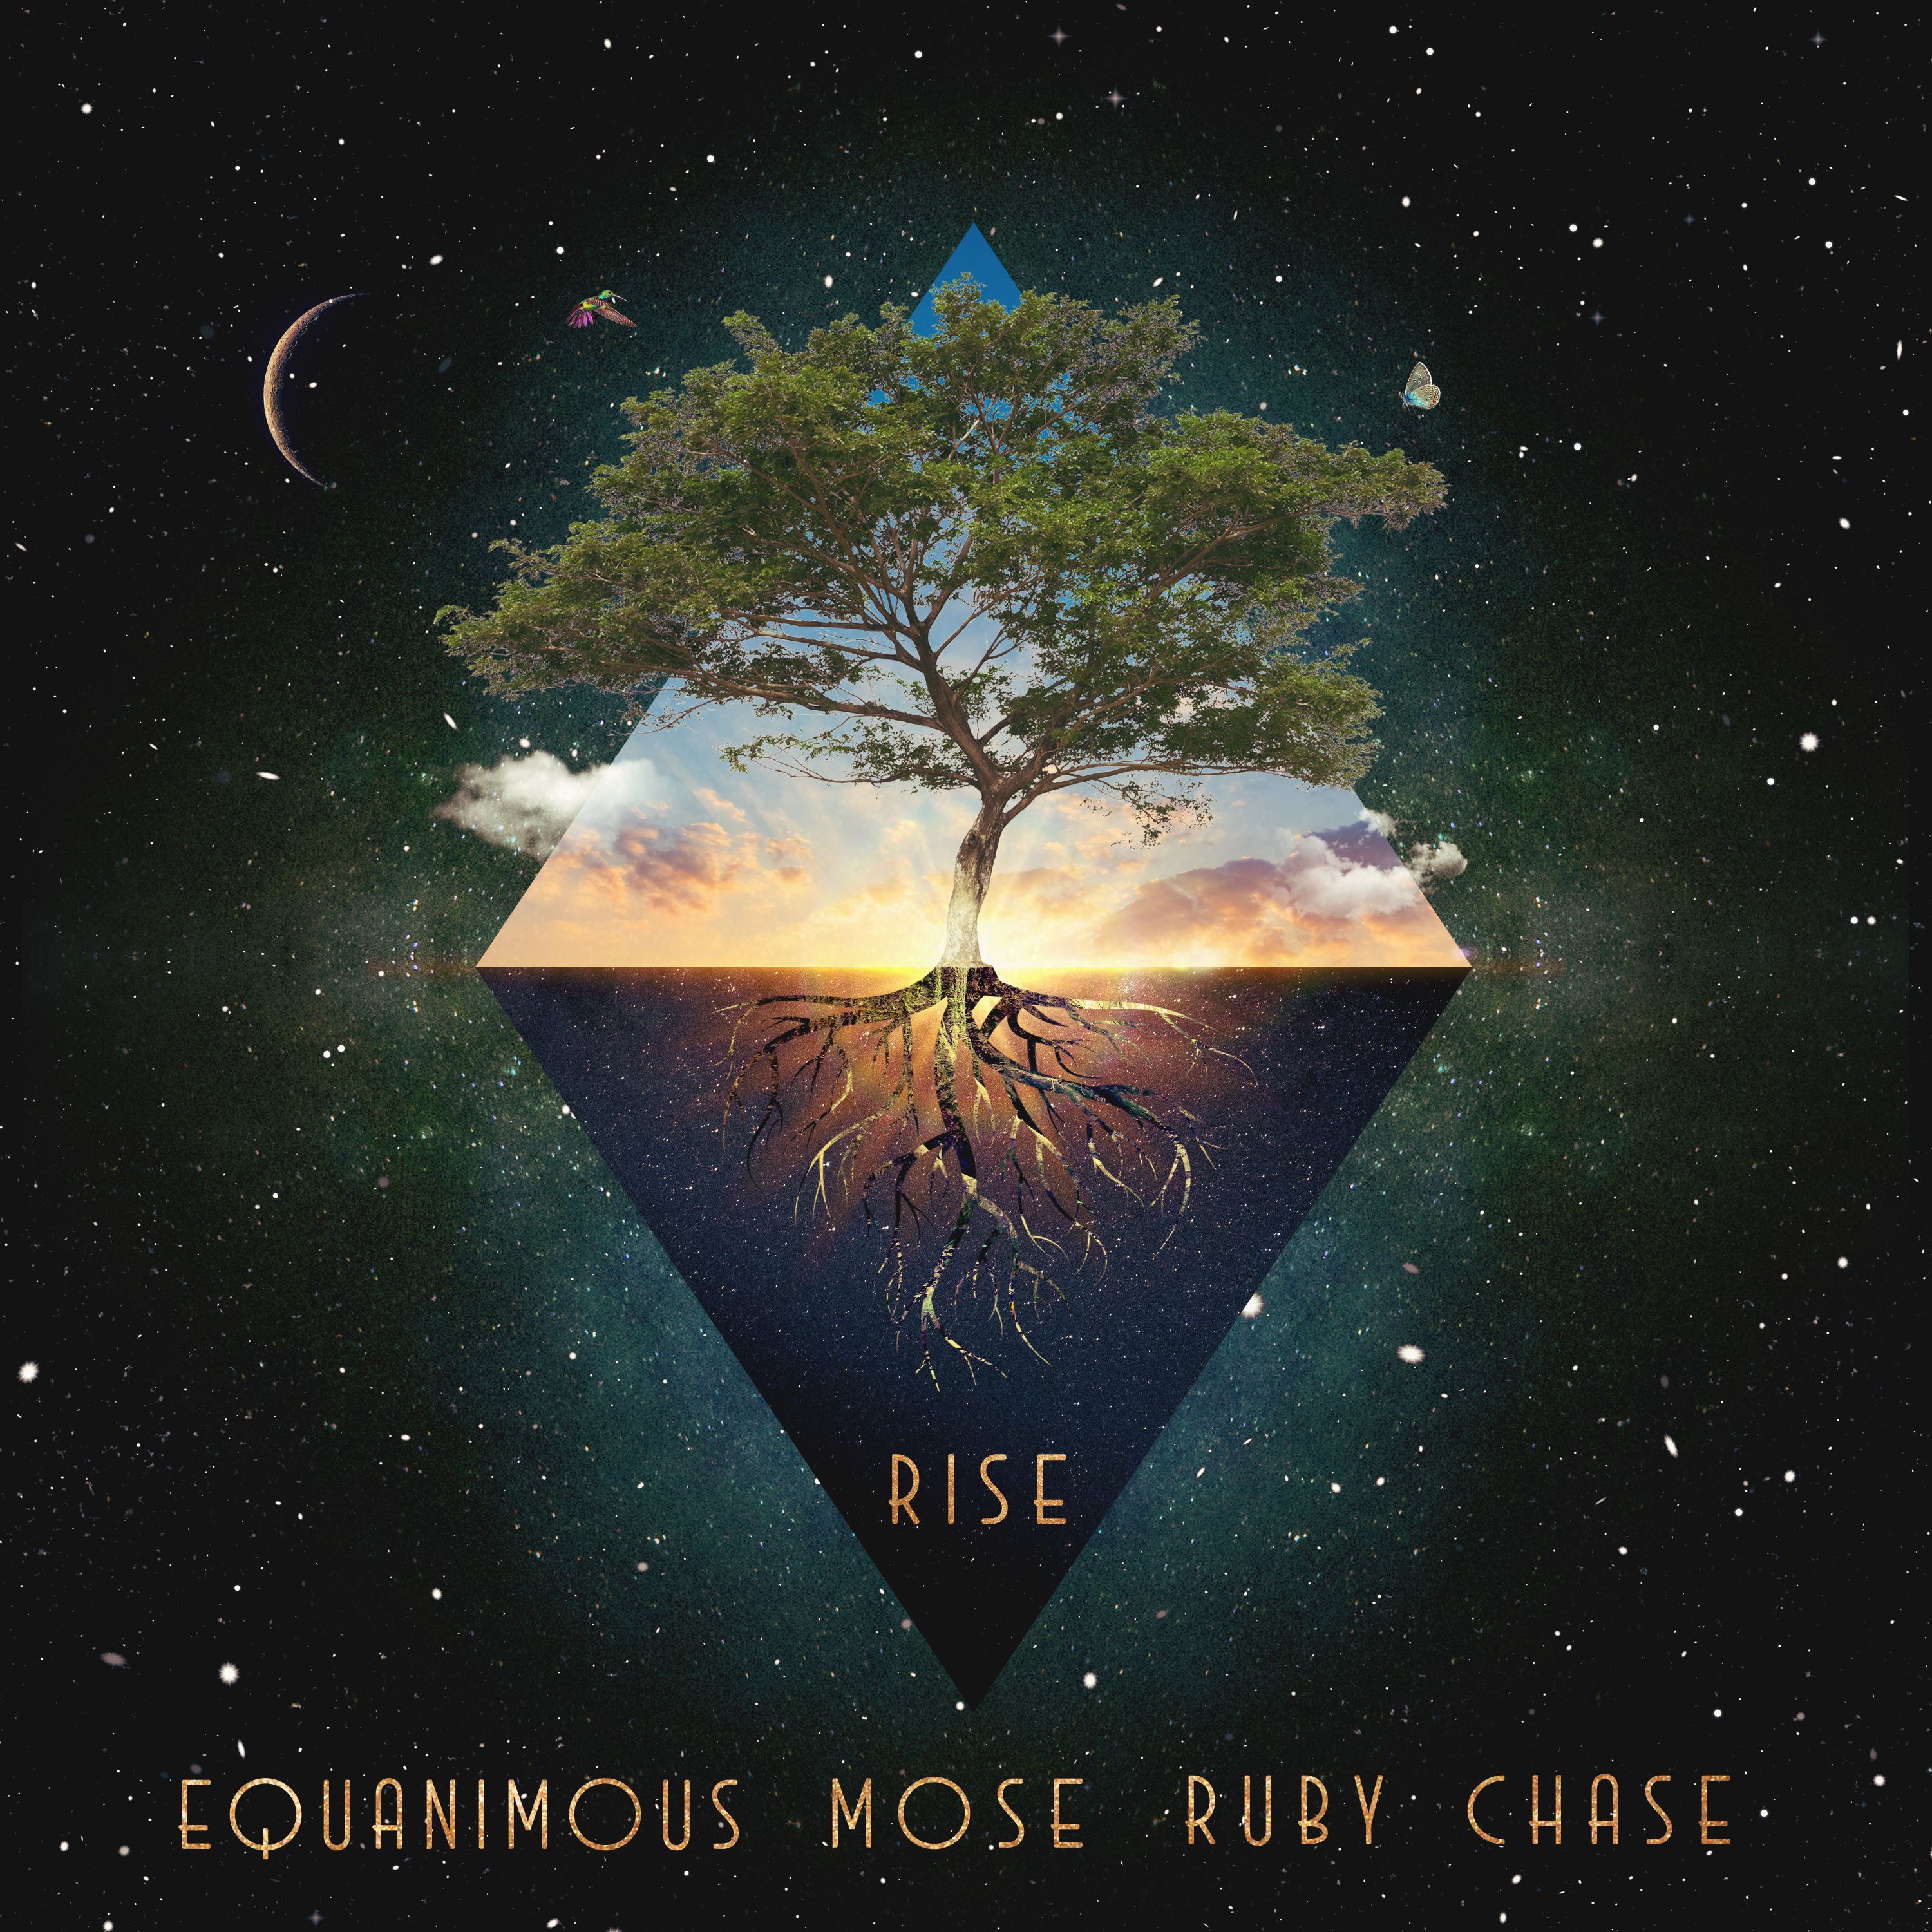 Skinuti Mose, Equanimous, Ruby Chase - Rise